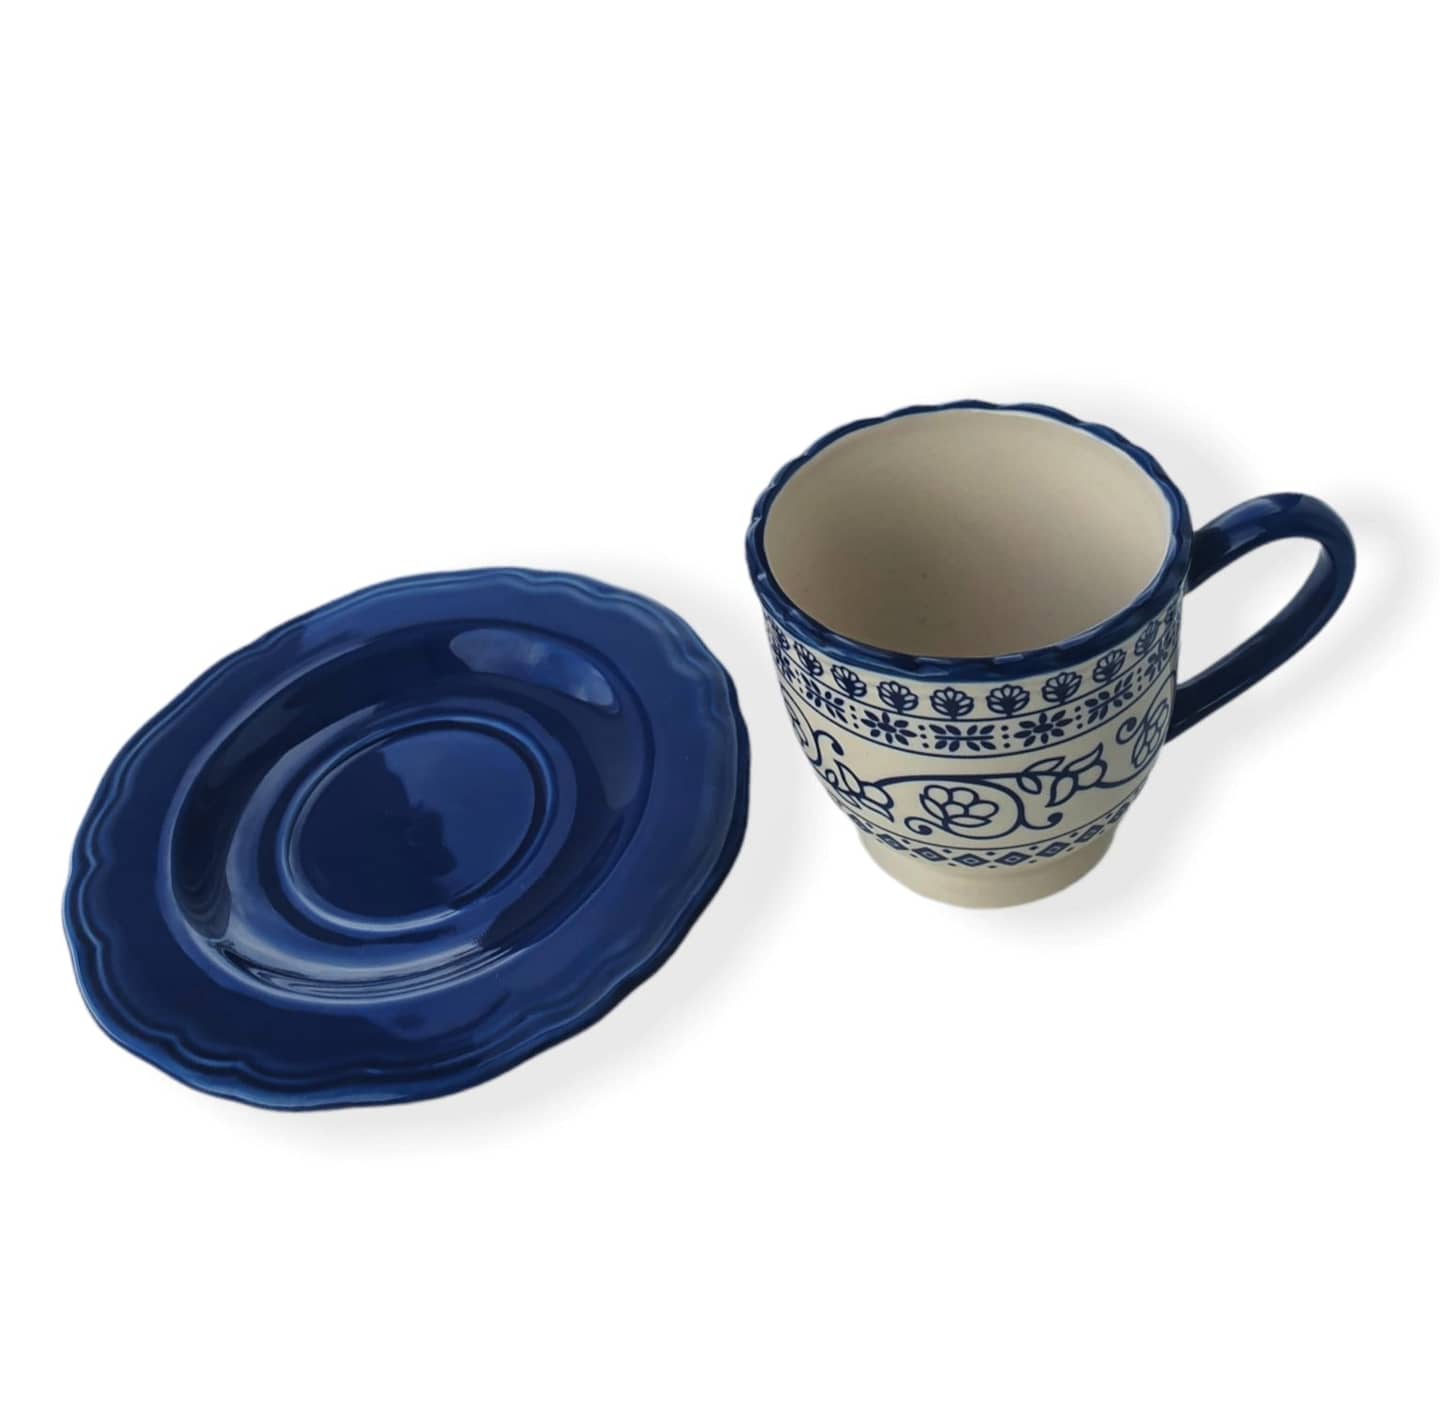 YLA Cup and saucer set